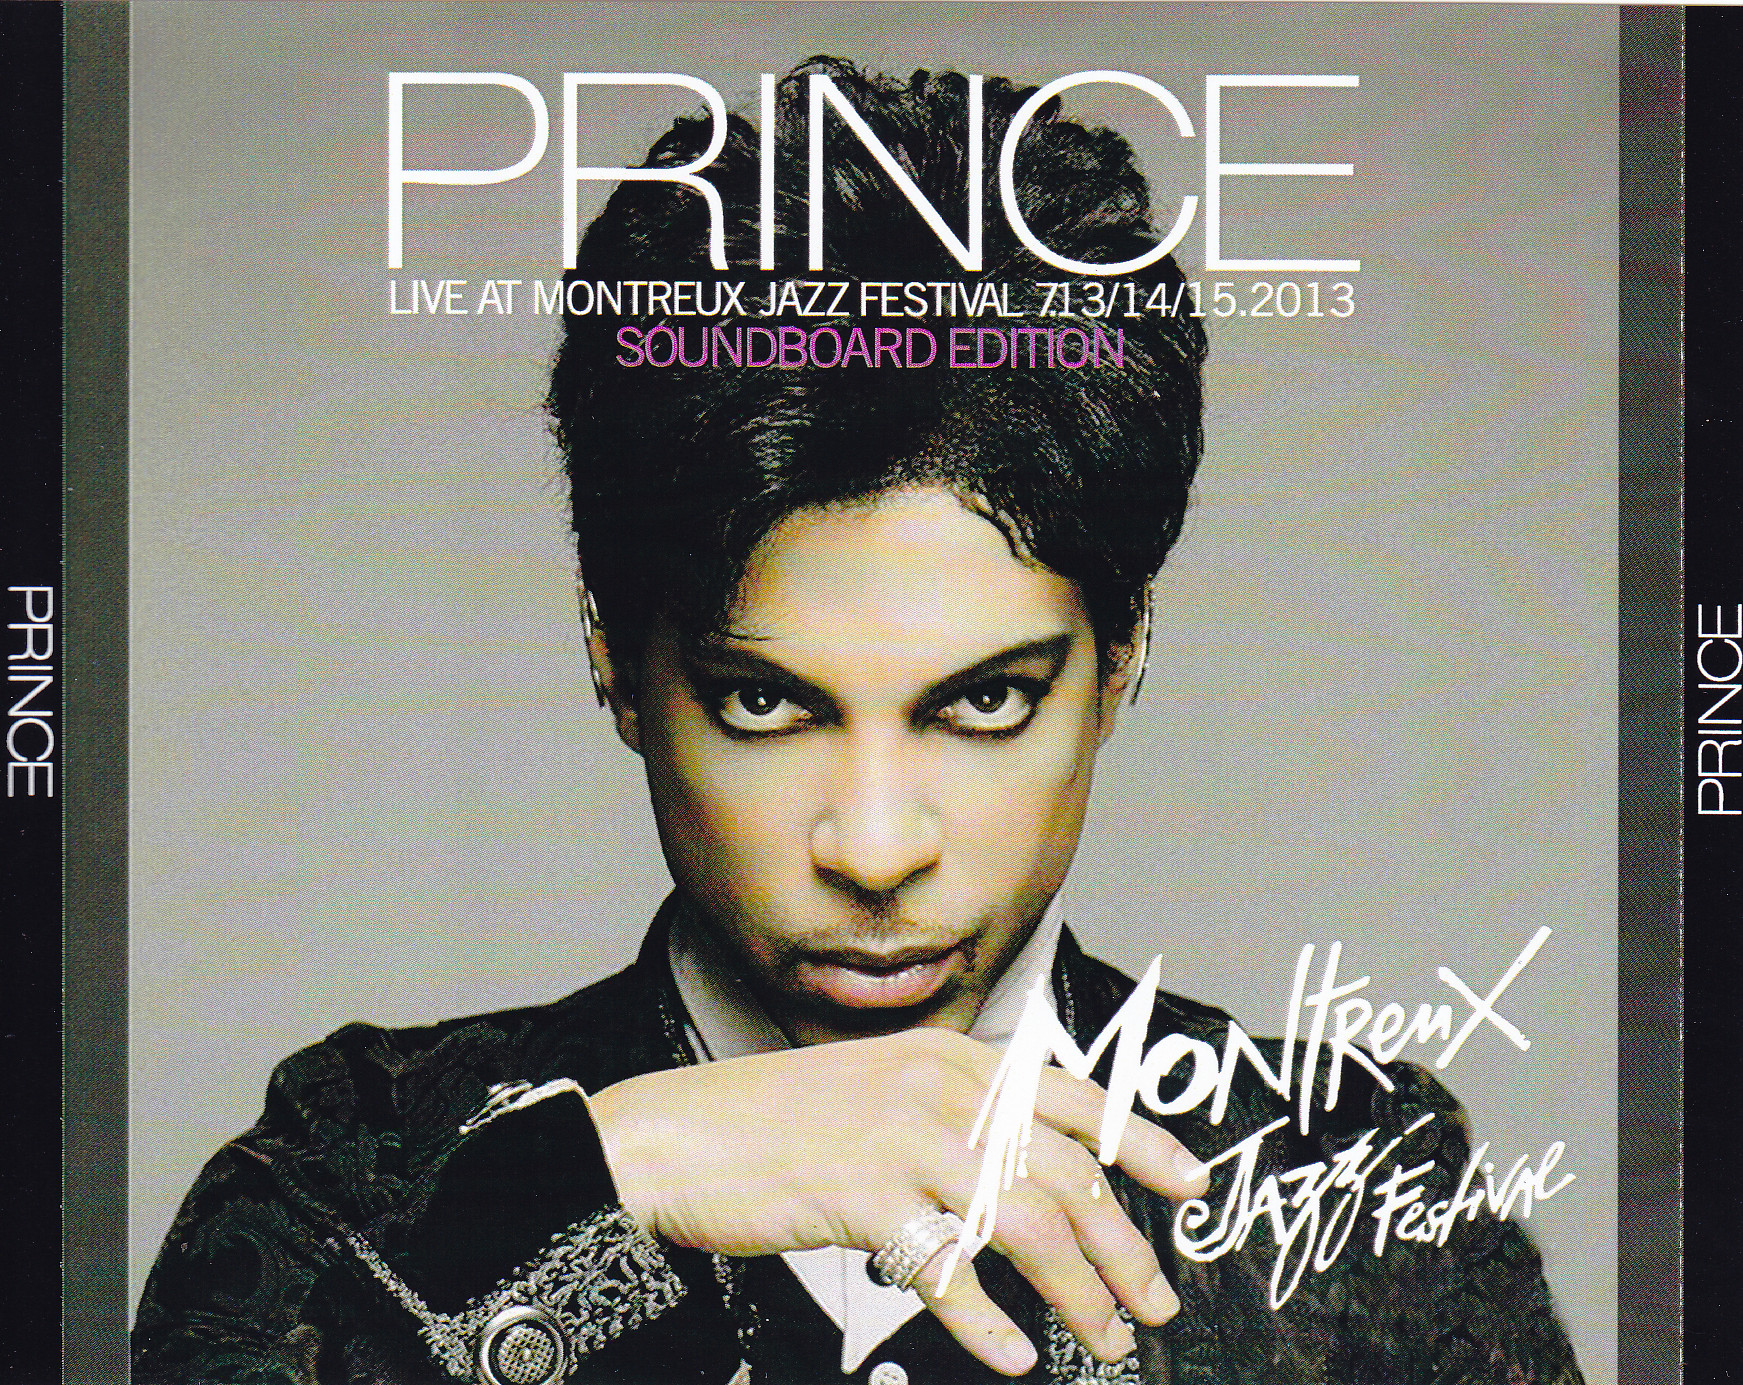 Prince / Montreux Jazz Festival 2013 Soundboard Edition / 6CDR 